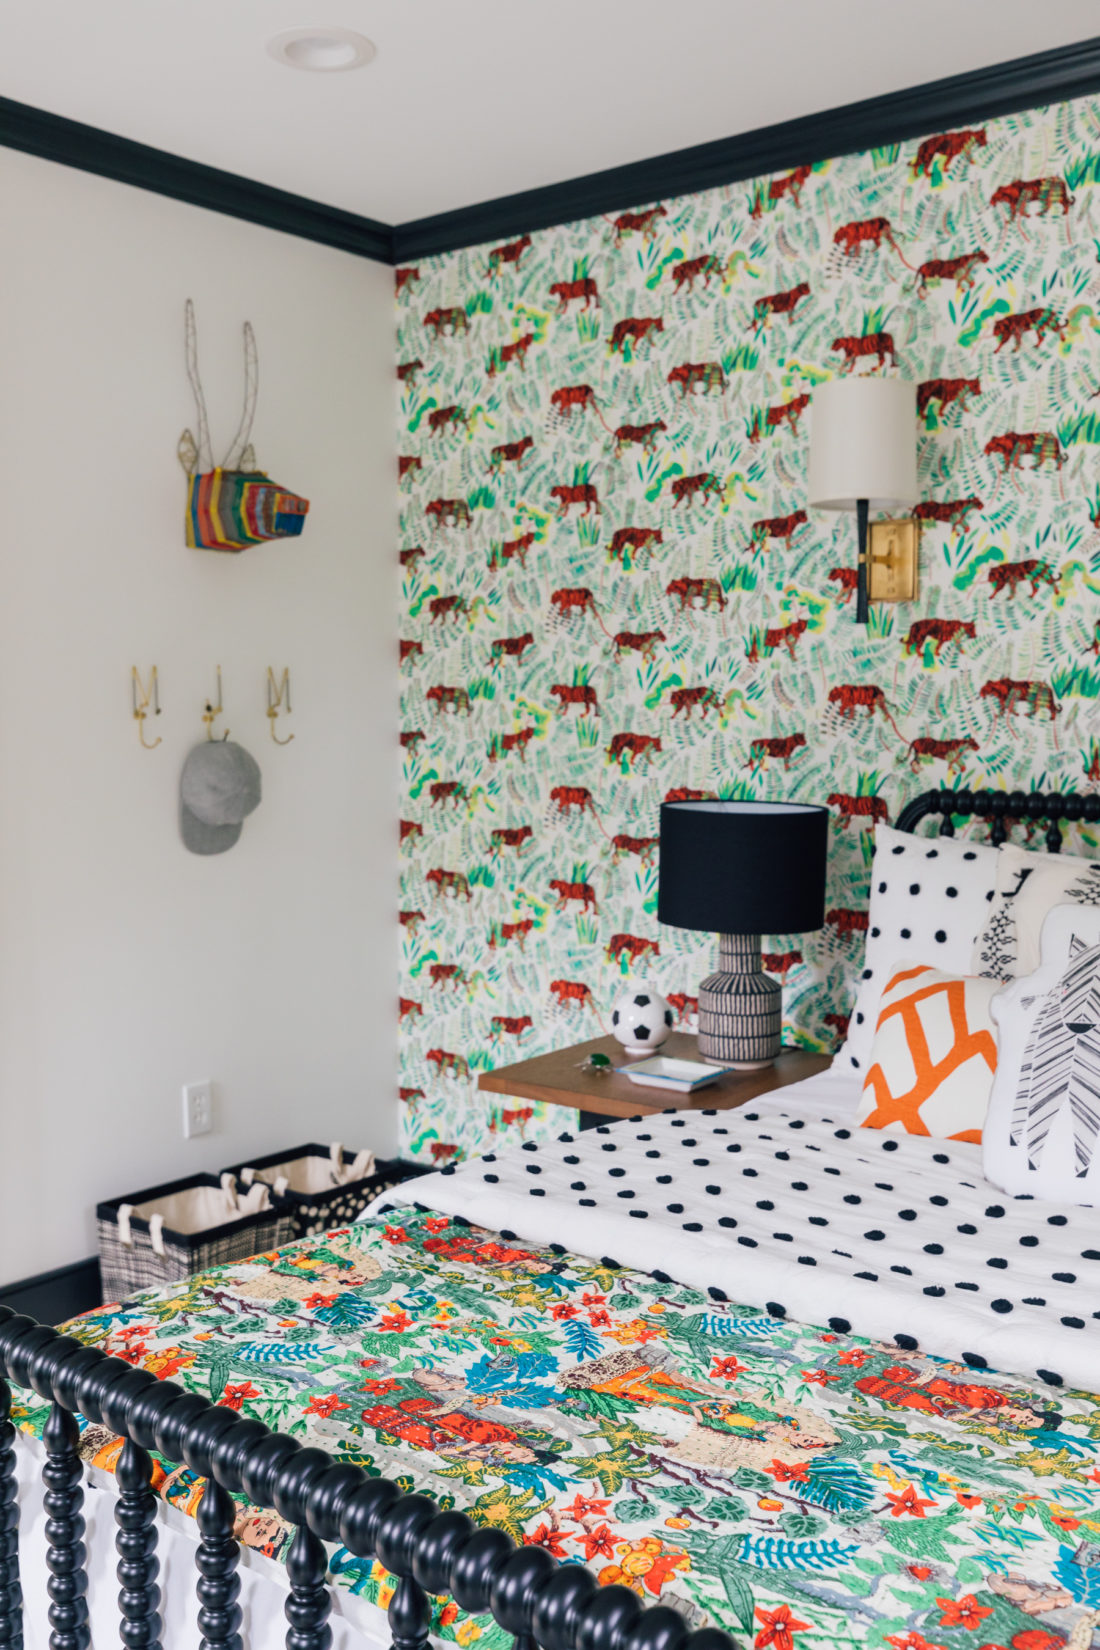 Constrasting patterns inside Eva Amurri Martino's son Major's new bedroom